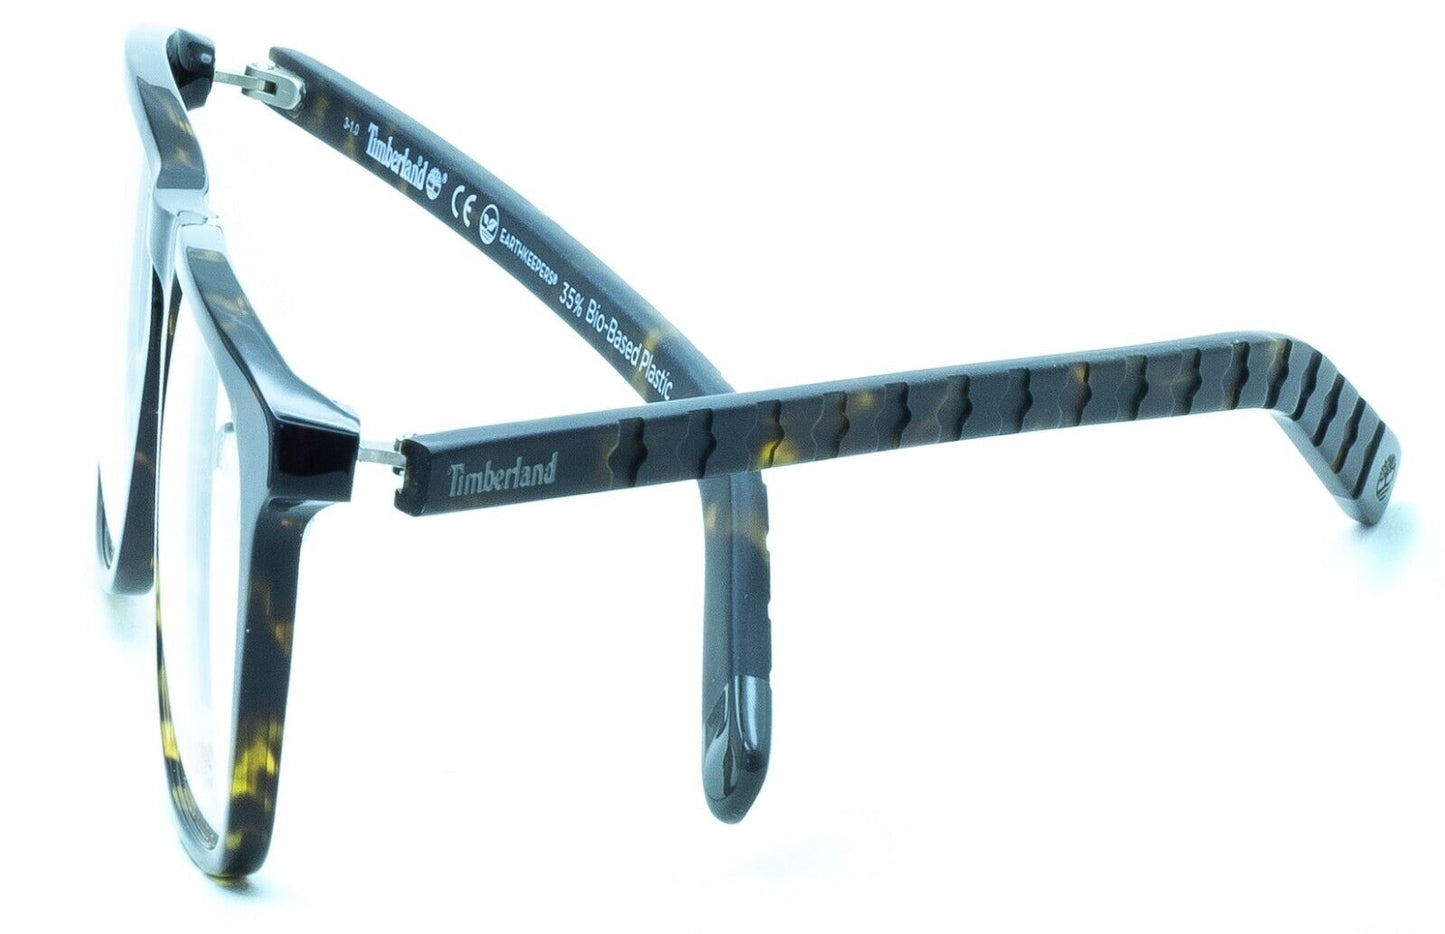 TIMBERLAND TB1688-D 052 55mm Eyewear FRAMES Glasses RX Optical Eyeglasses - New